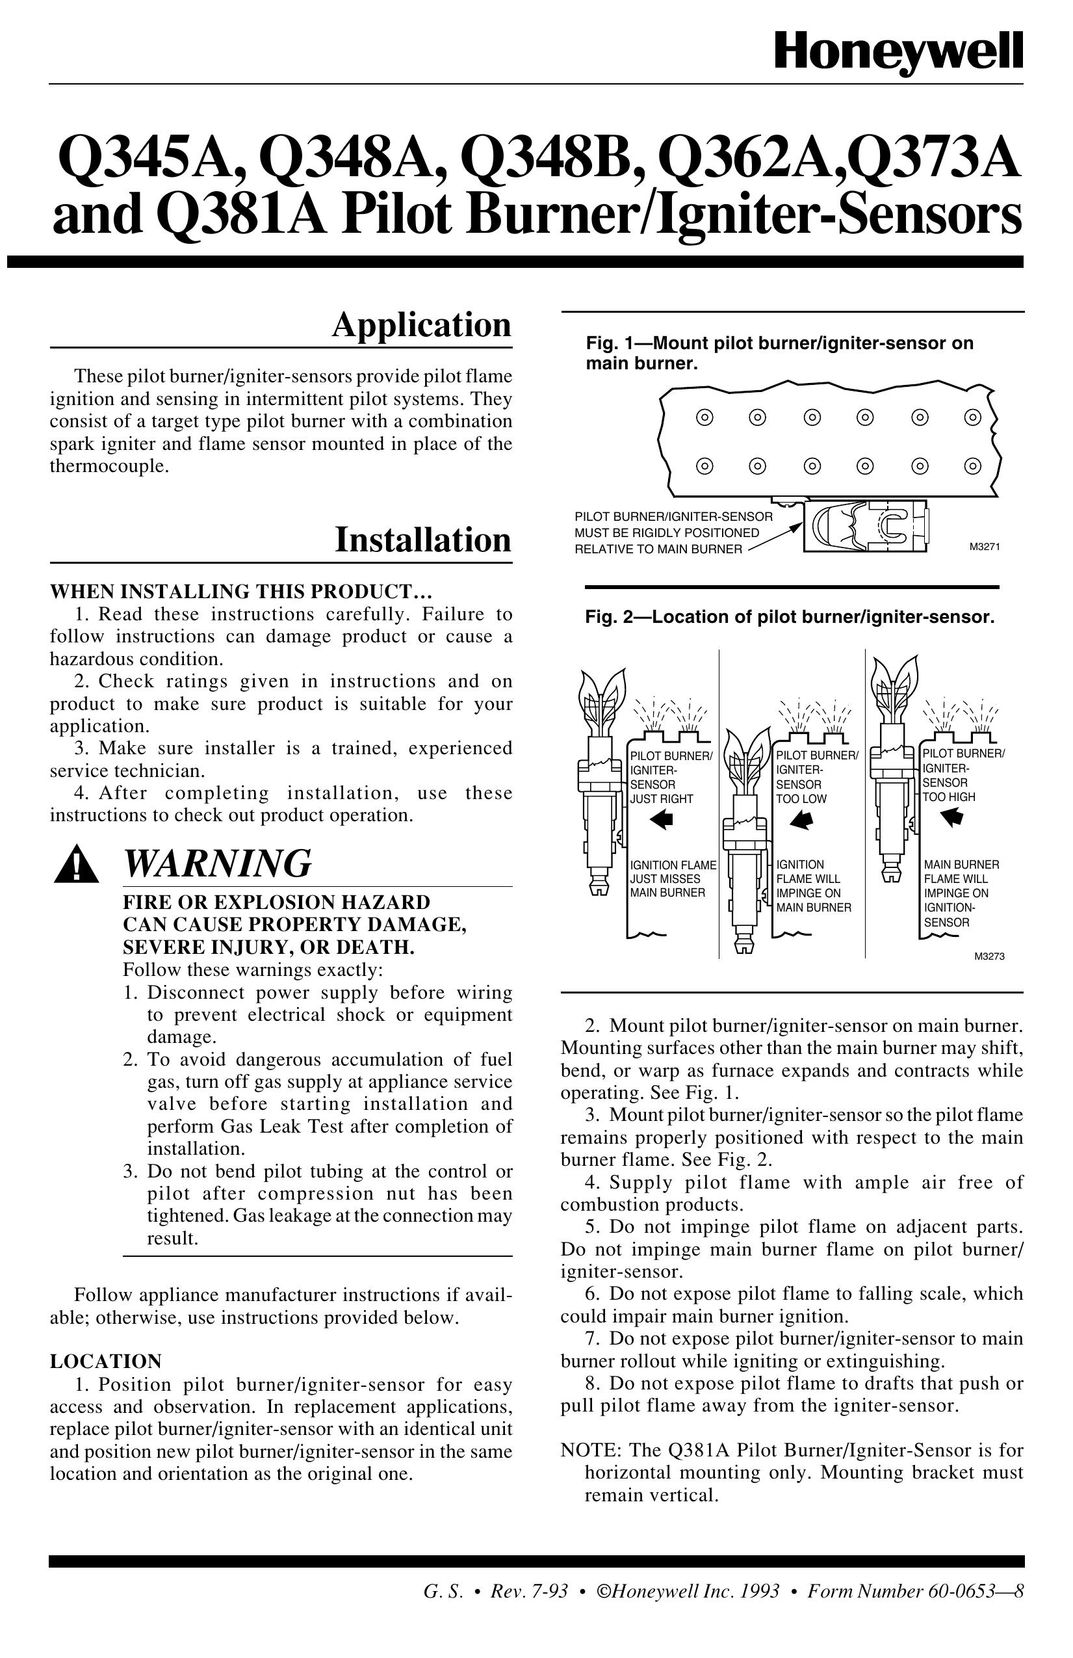 Honeywell Q348B Burner User Manual